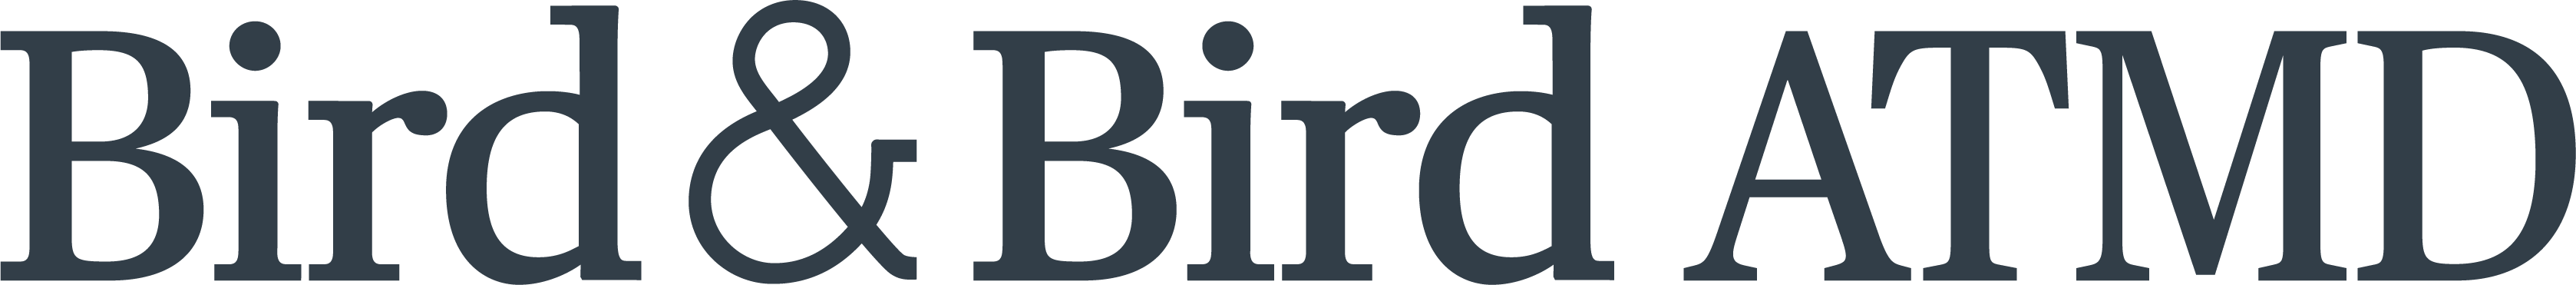 Bird & Bird Atmd Llp logo